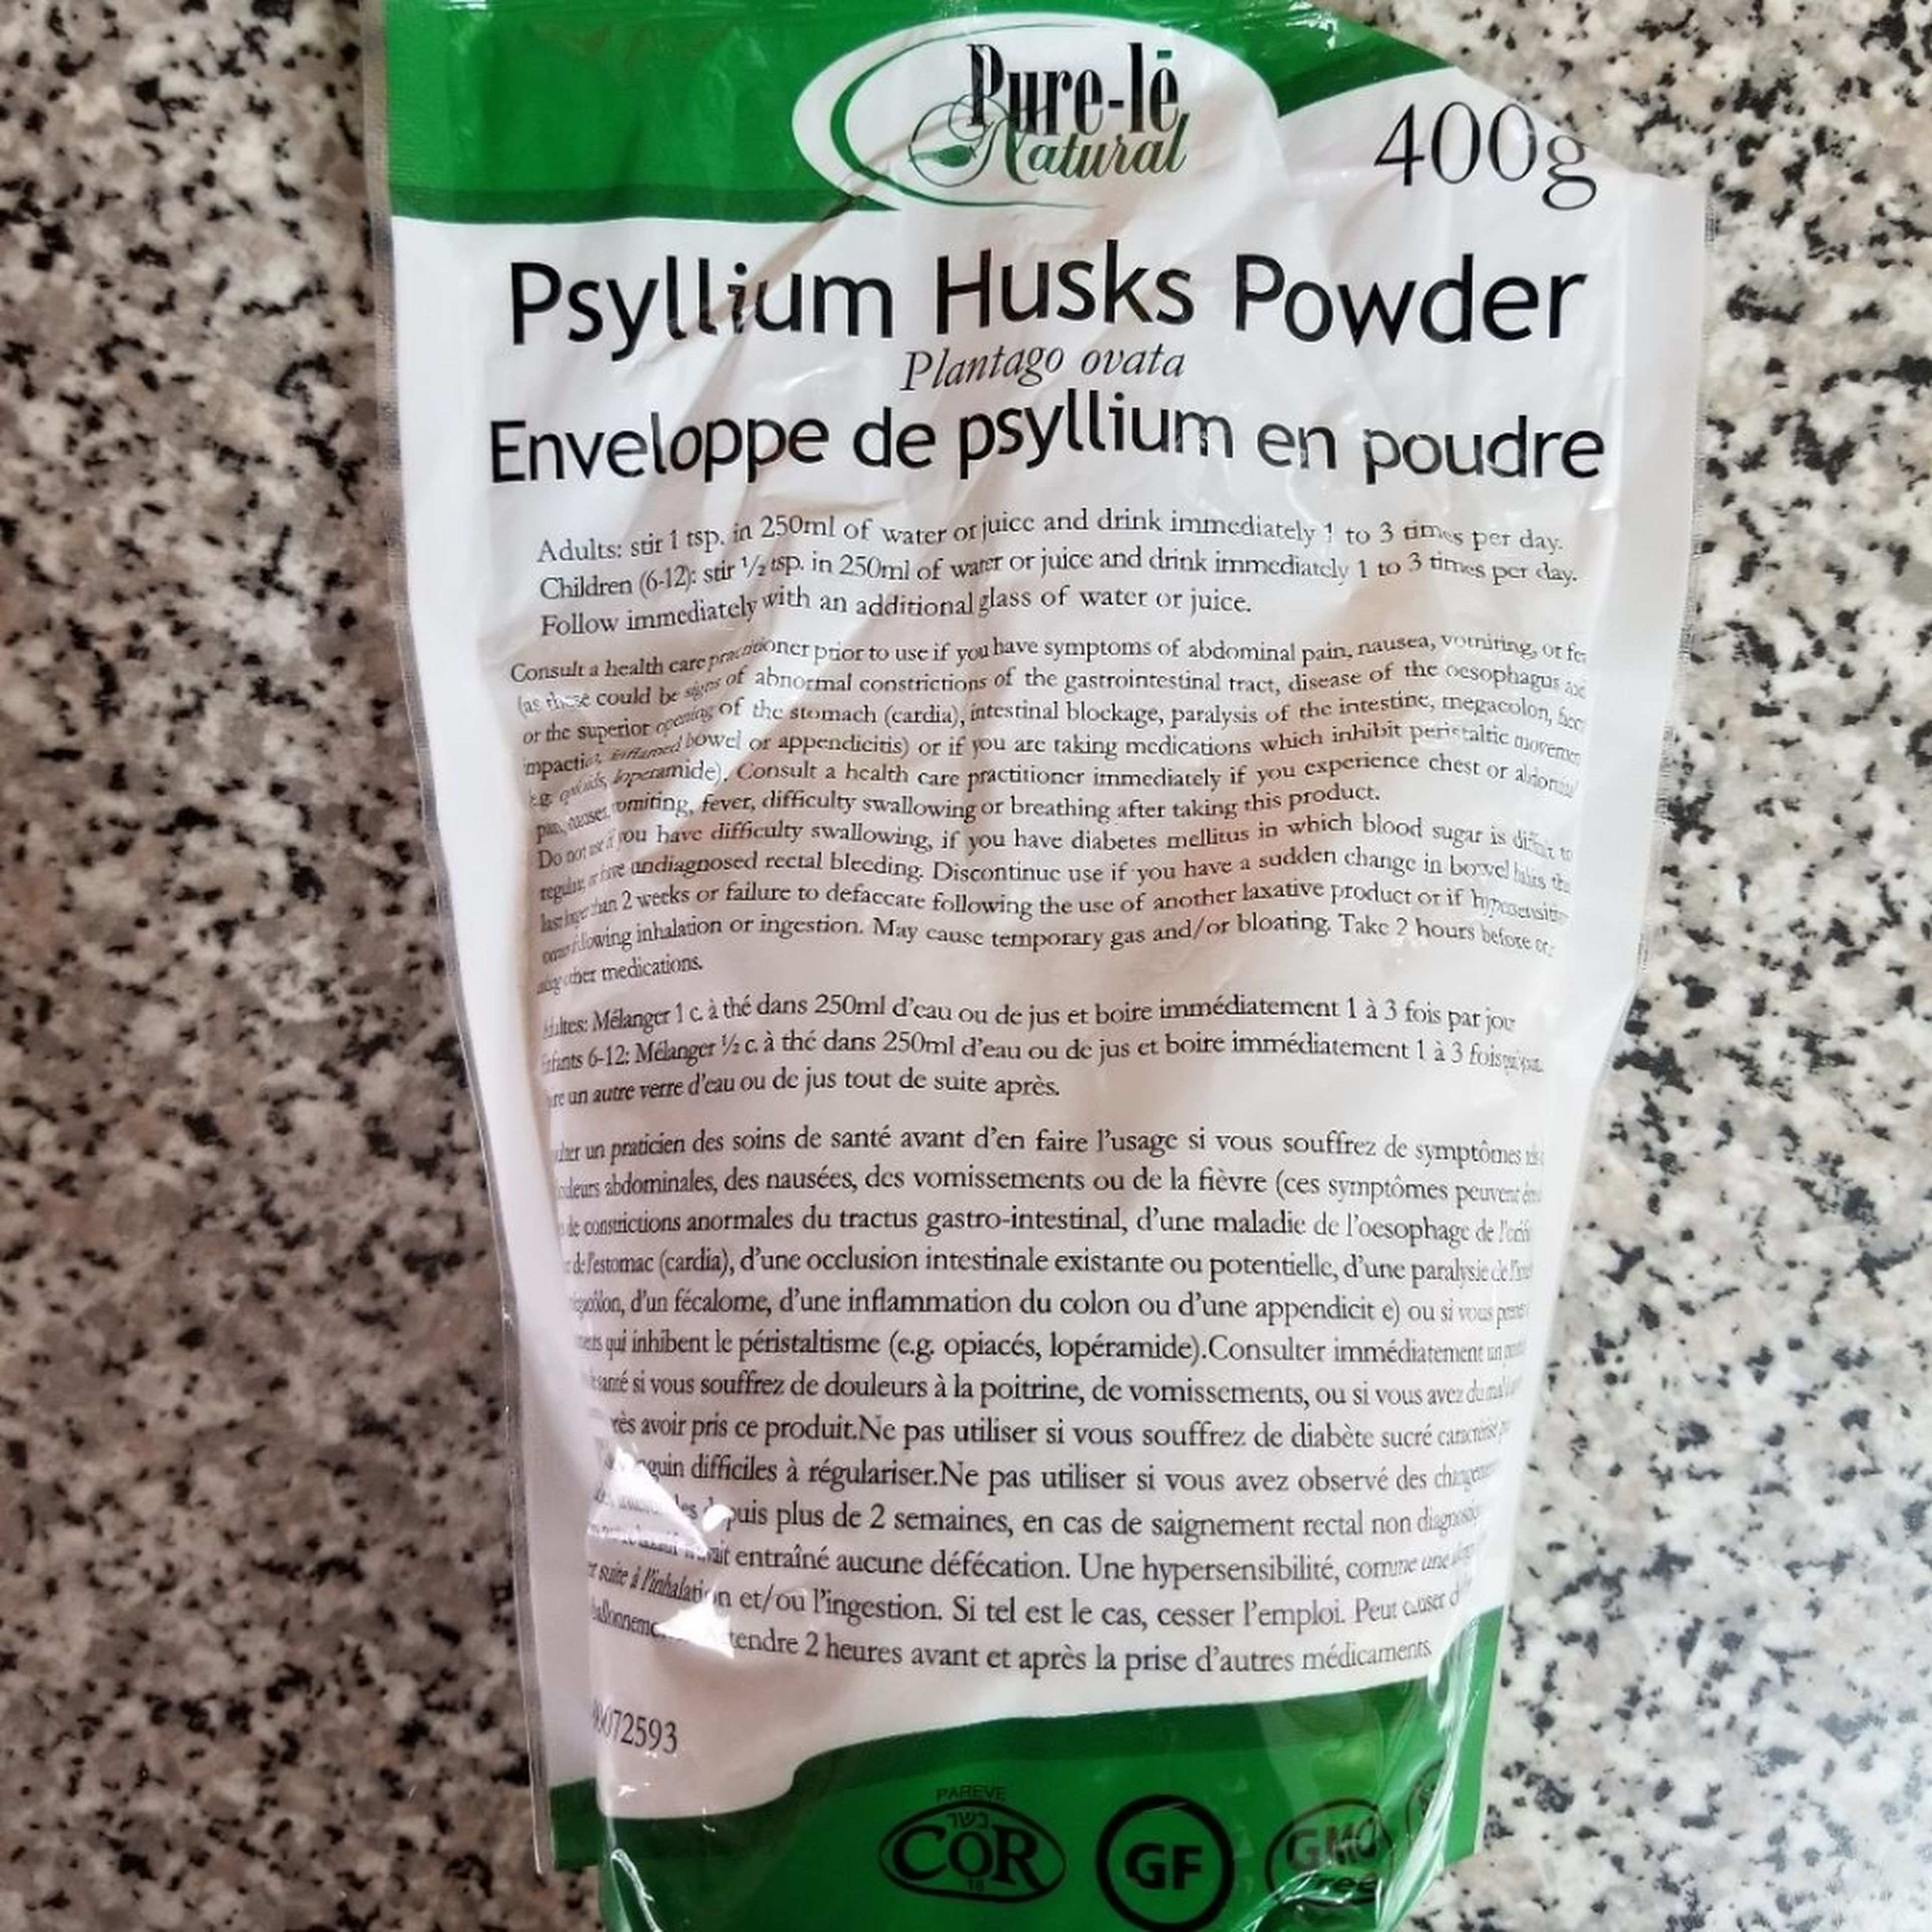 Add 30g psyllium husk powder. Available at Loblaws.